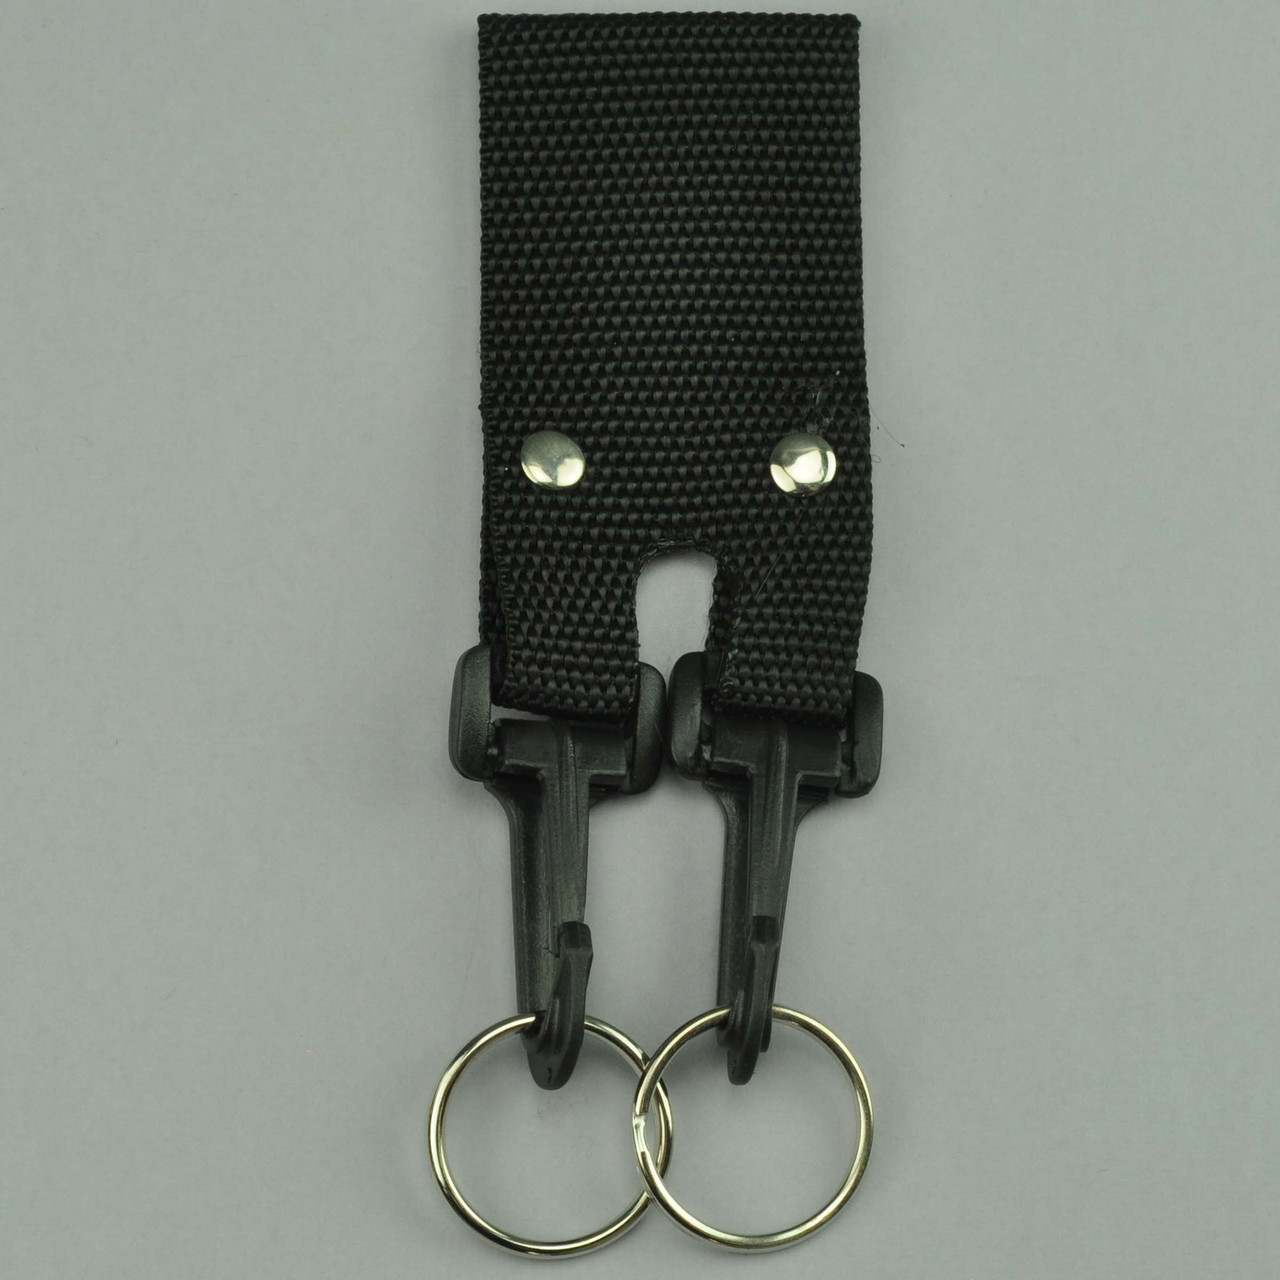 Shop for and Buy Nylon Belt Key Holder Double Hooks at